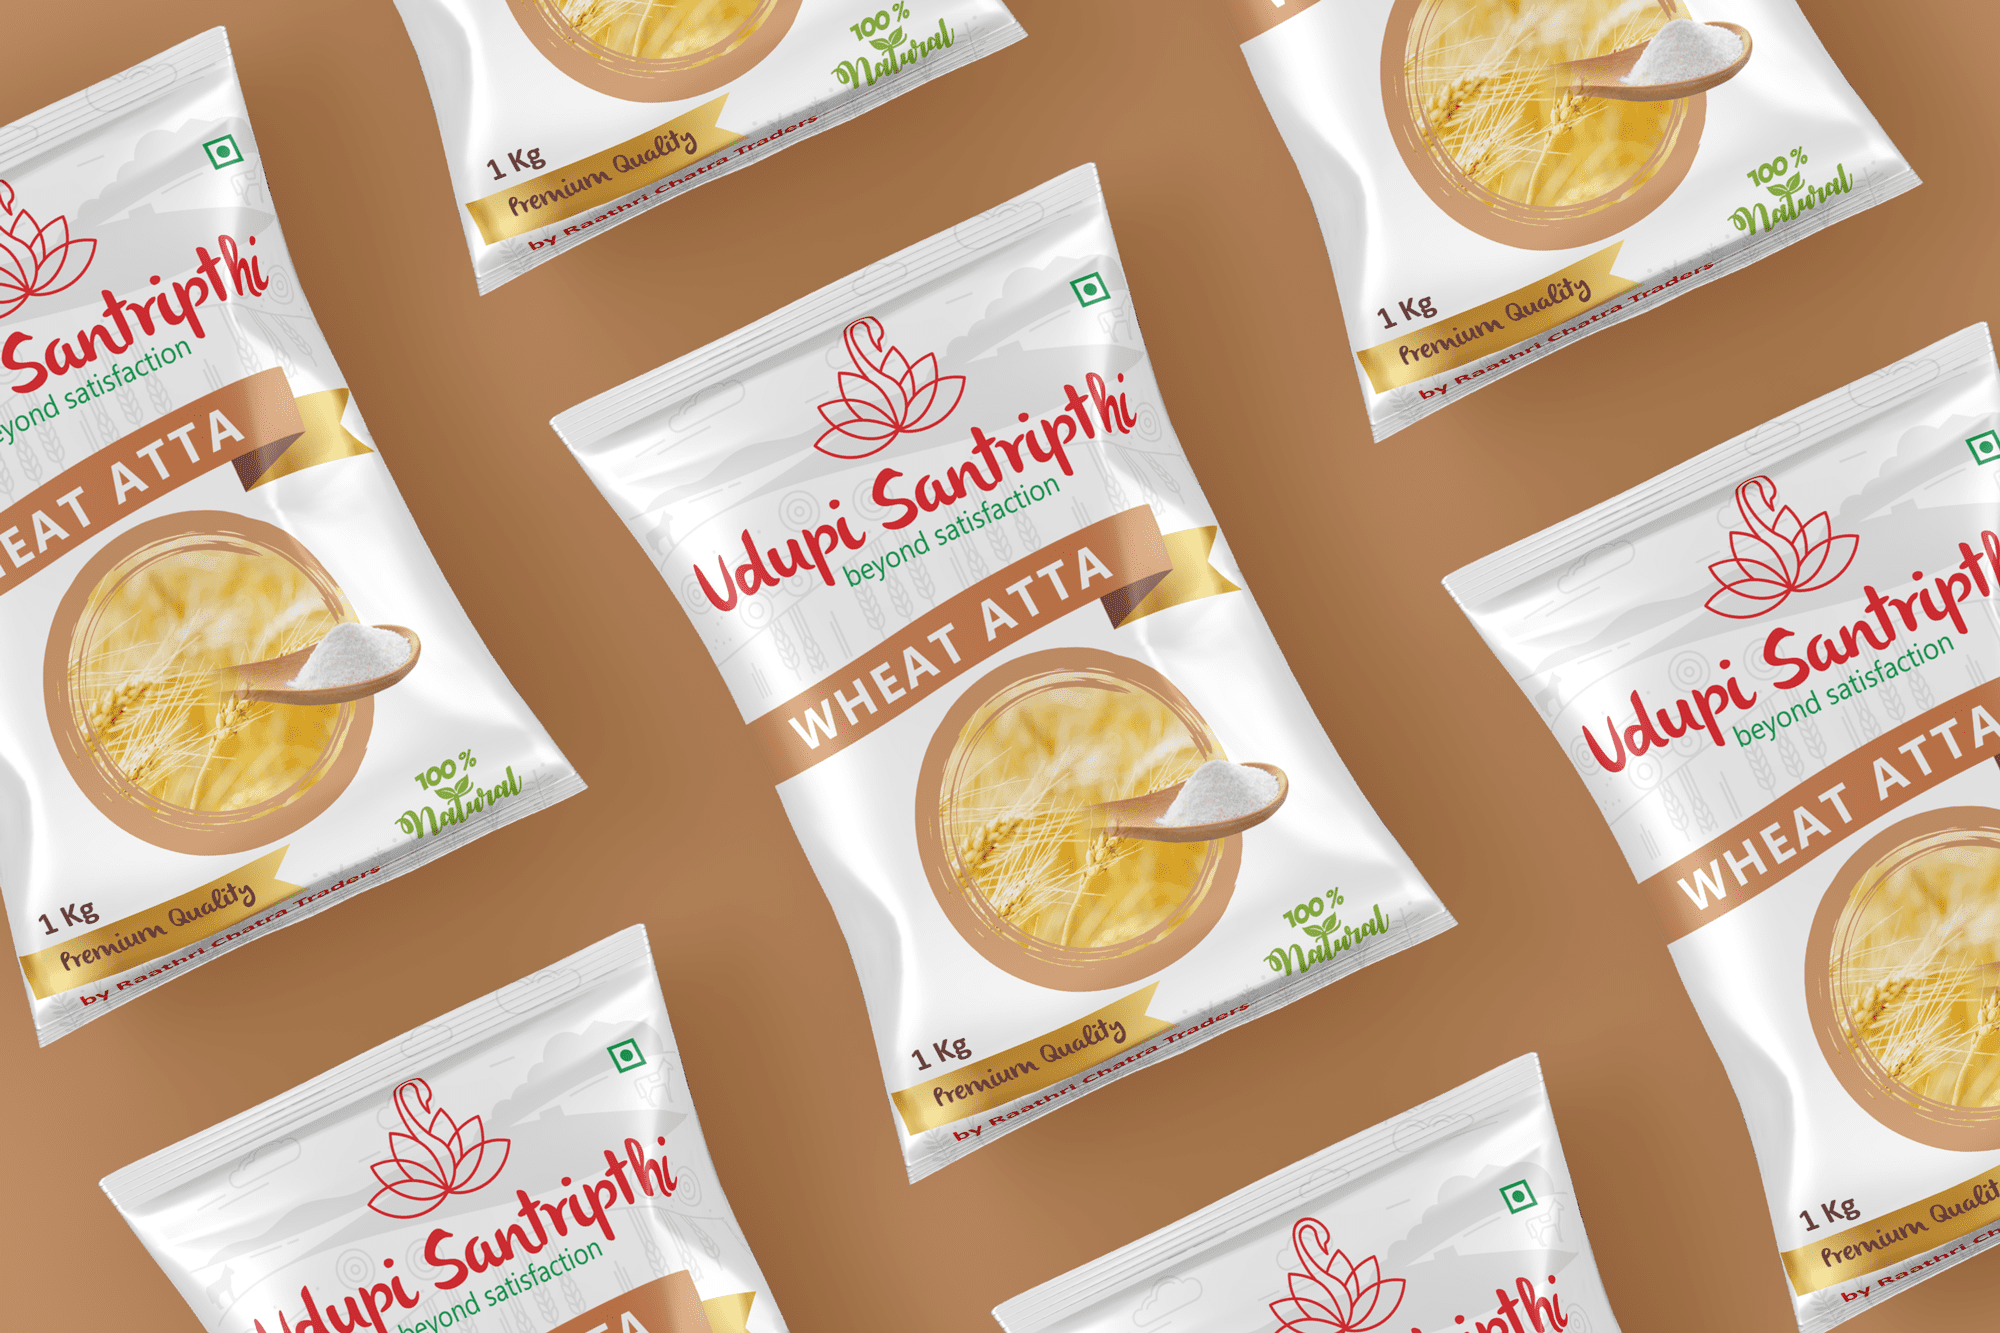 Udupi Santripthi Brand Wheat Flour Branding Packaging Design Digital Marketing in Erode by Creative Prints thecreativeprints